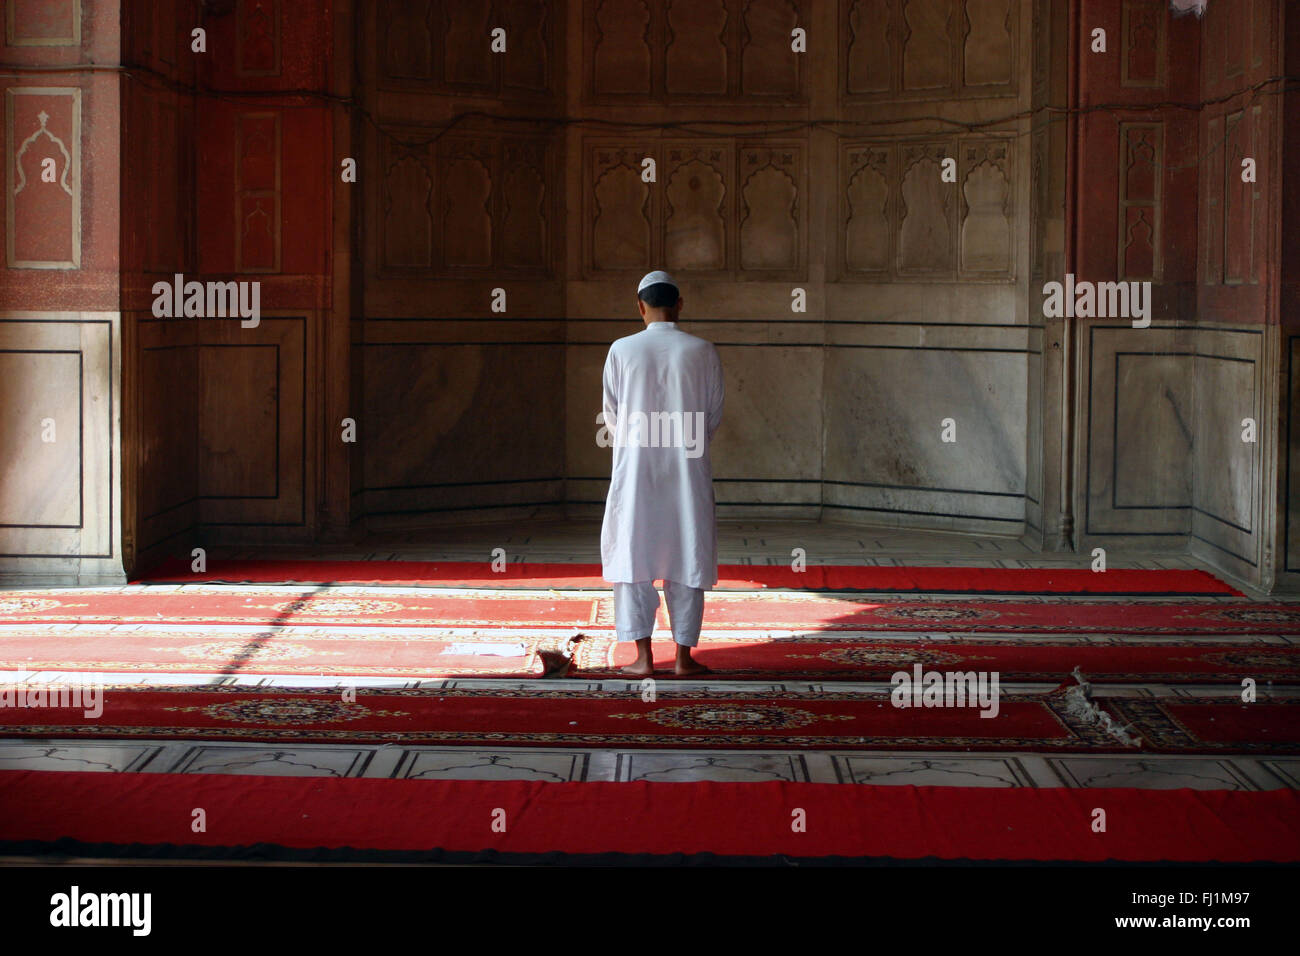 Man praying at Jama masjid, Delhi, India Stock Photo